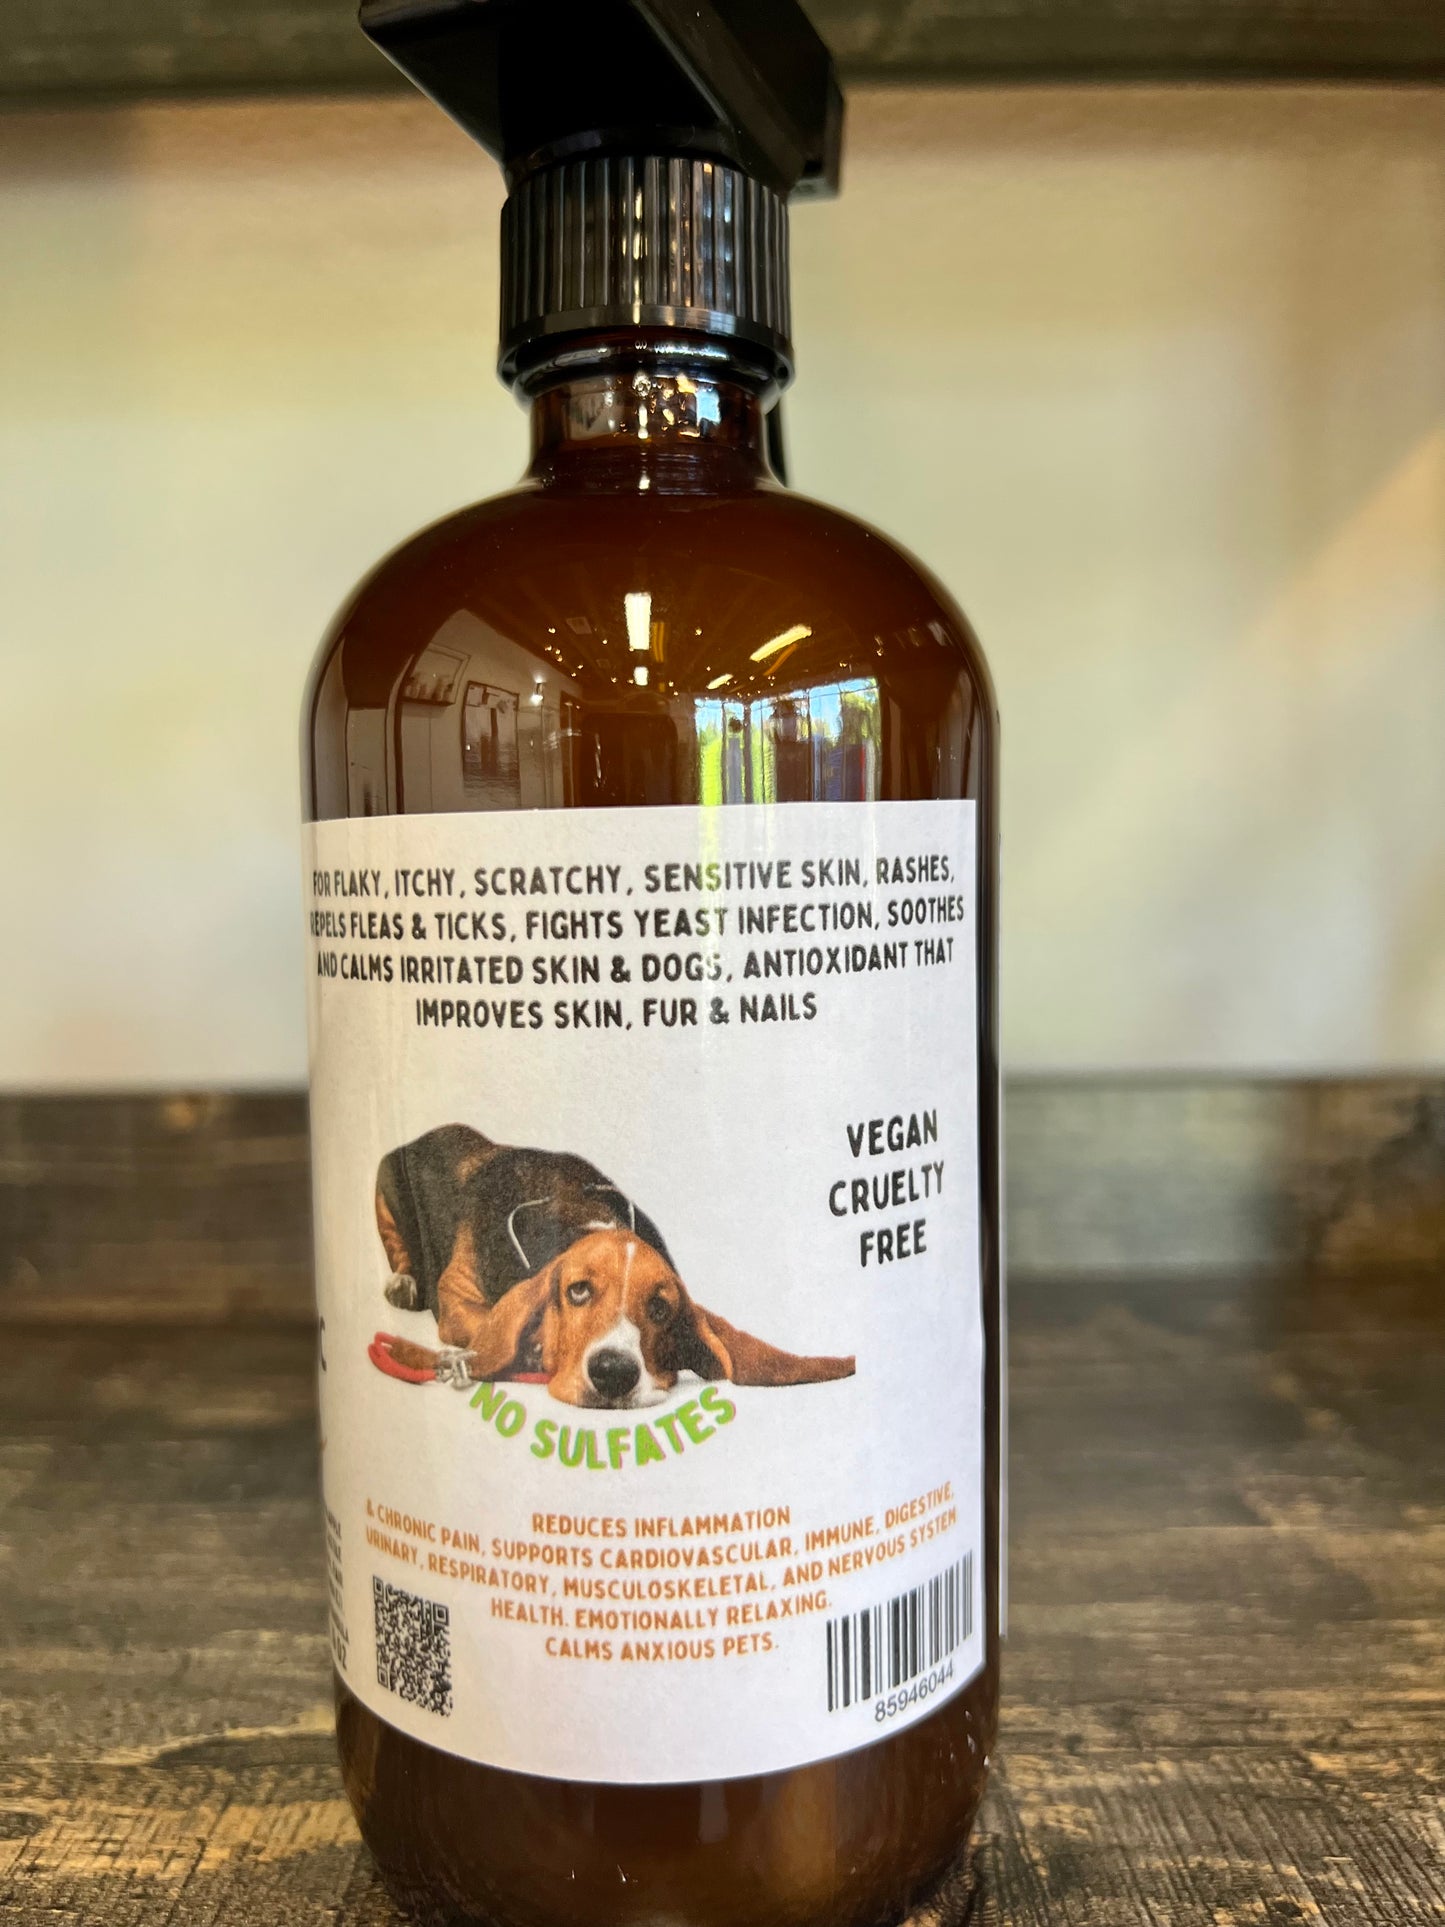 Stop Itching the Healthy Way Organic Dog Shampoo